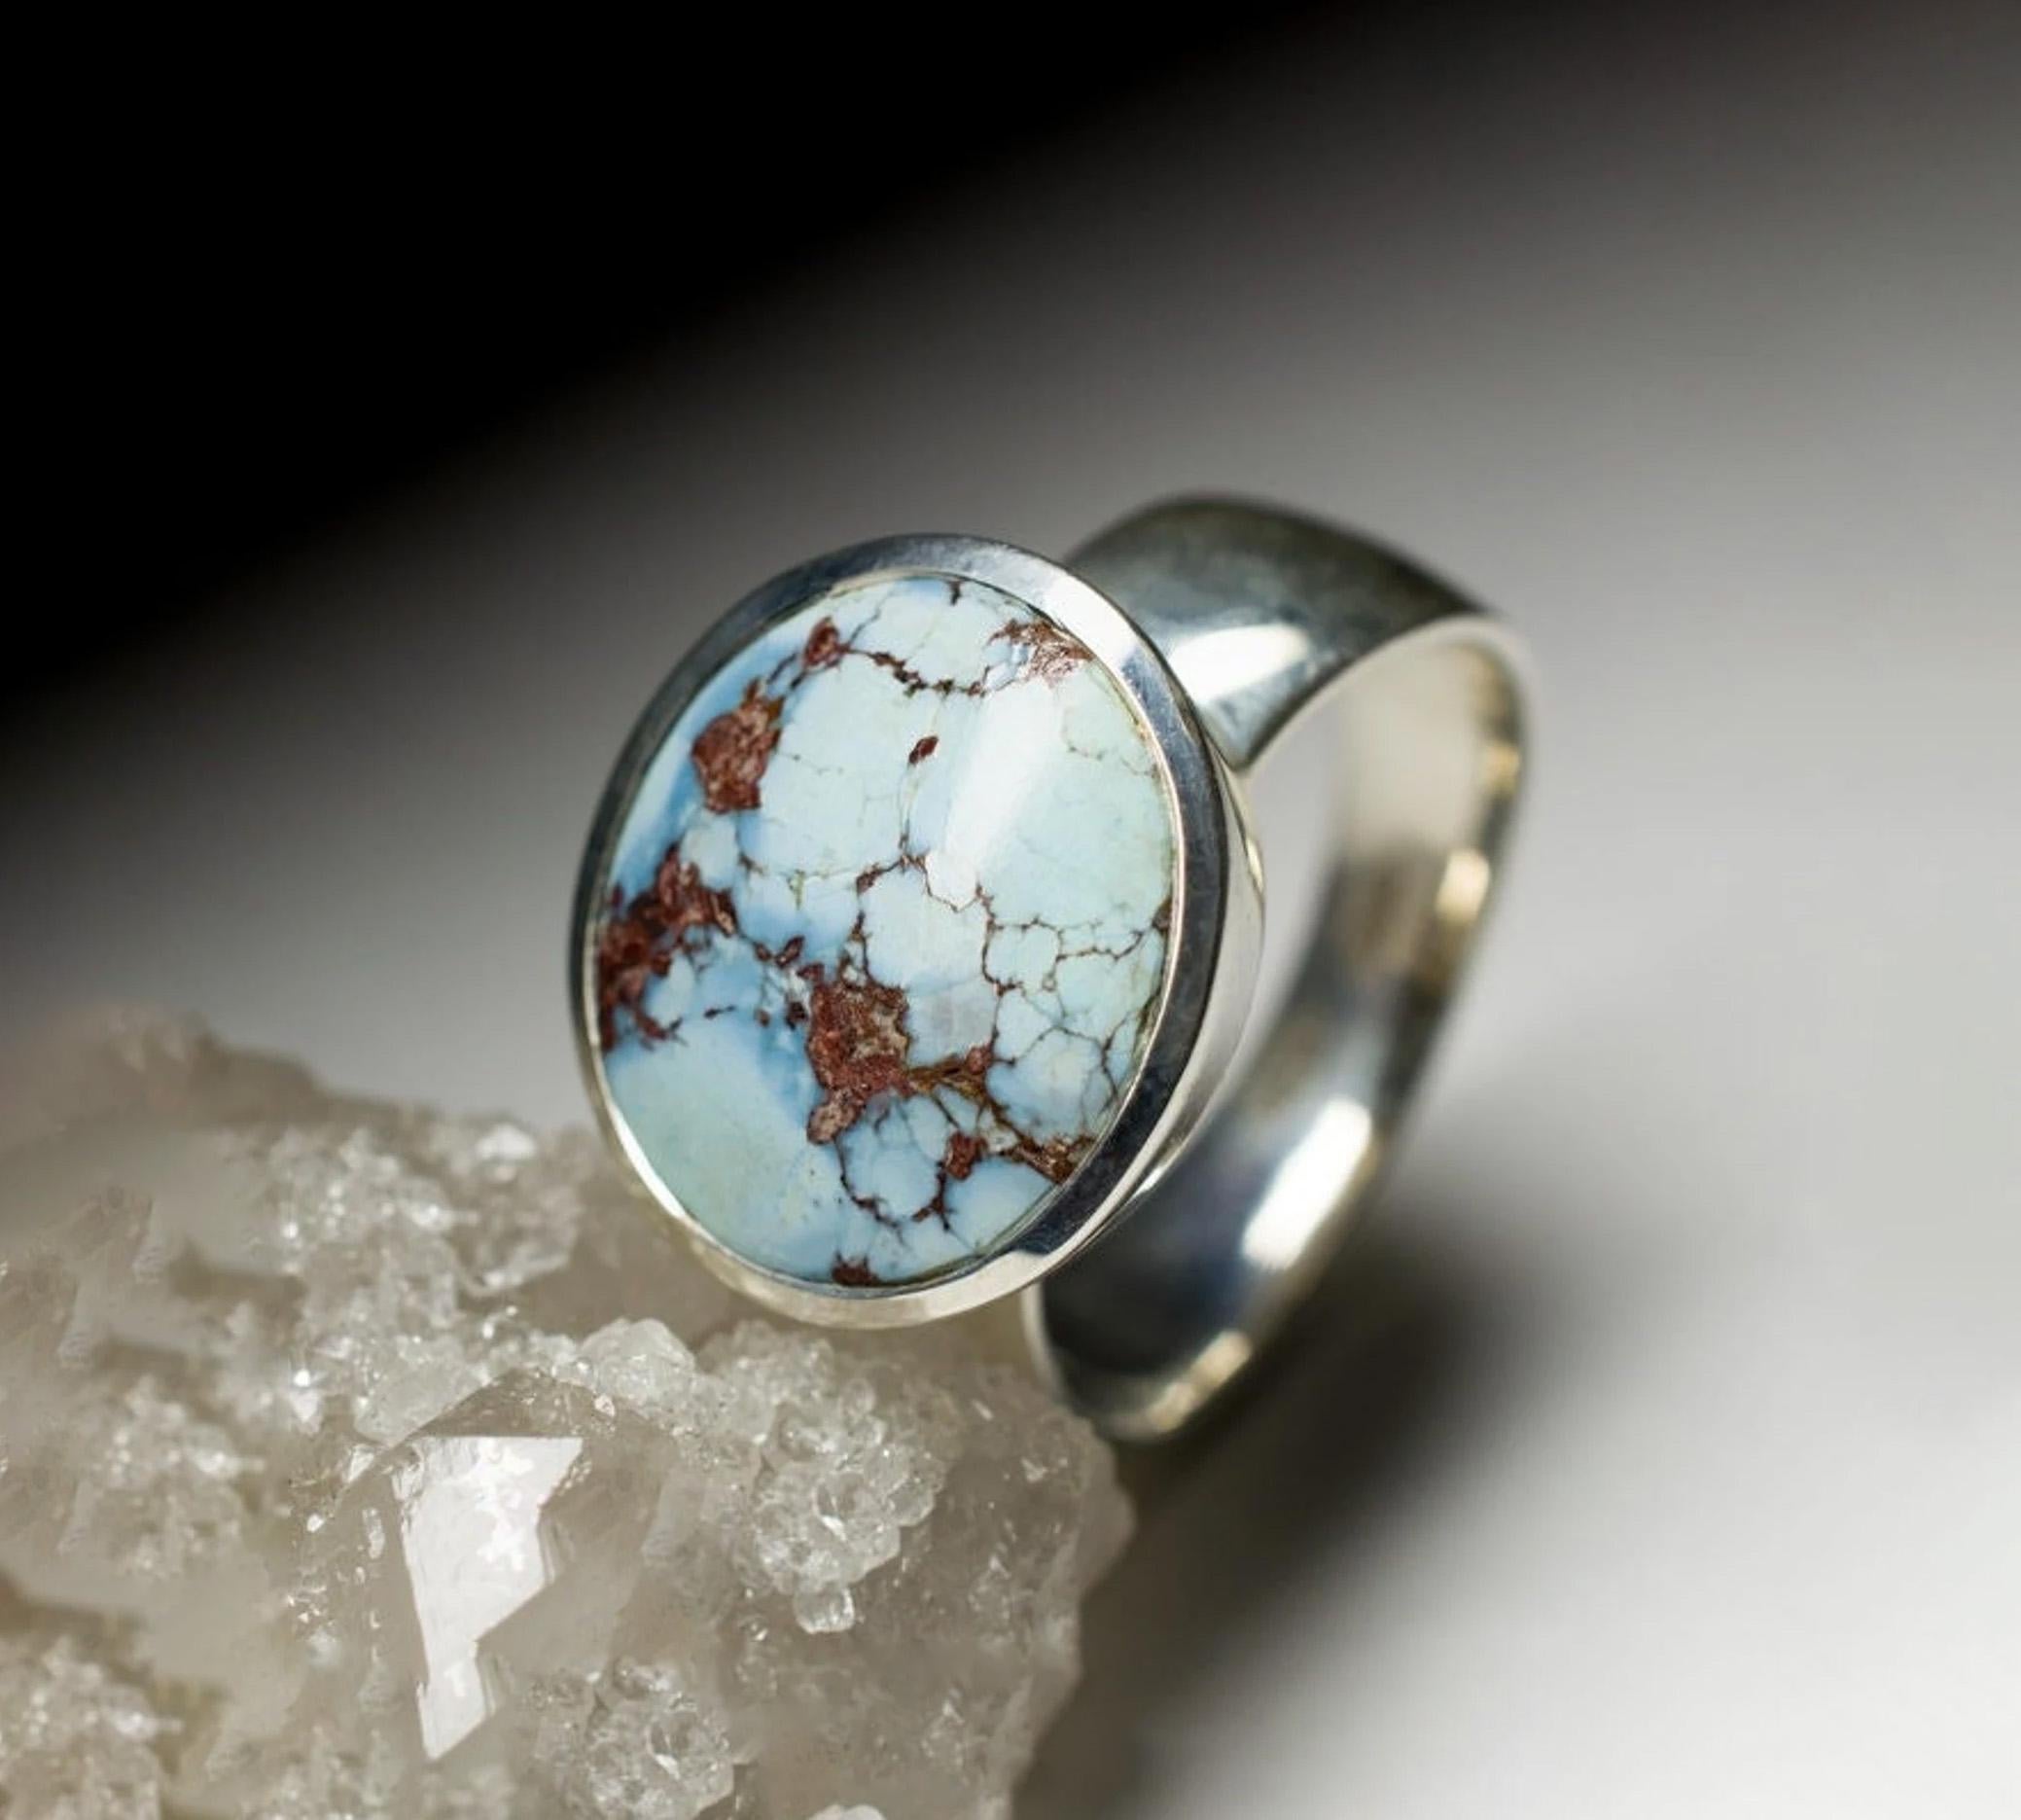 Men's silver ring with natural big Turquoise
turquoise origin - Kazakhstan
stone measurements - 0.28 х 0.55 х 0.59 in / 7 х 14 х 15 mm
stone weight - 9.3 carats
ring weight - 9.90 grams
ring size - 10 US 